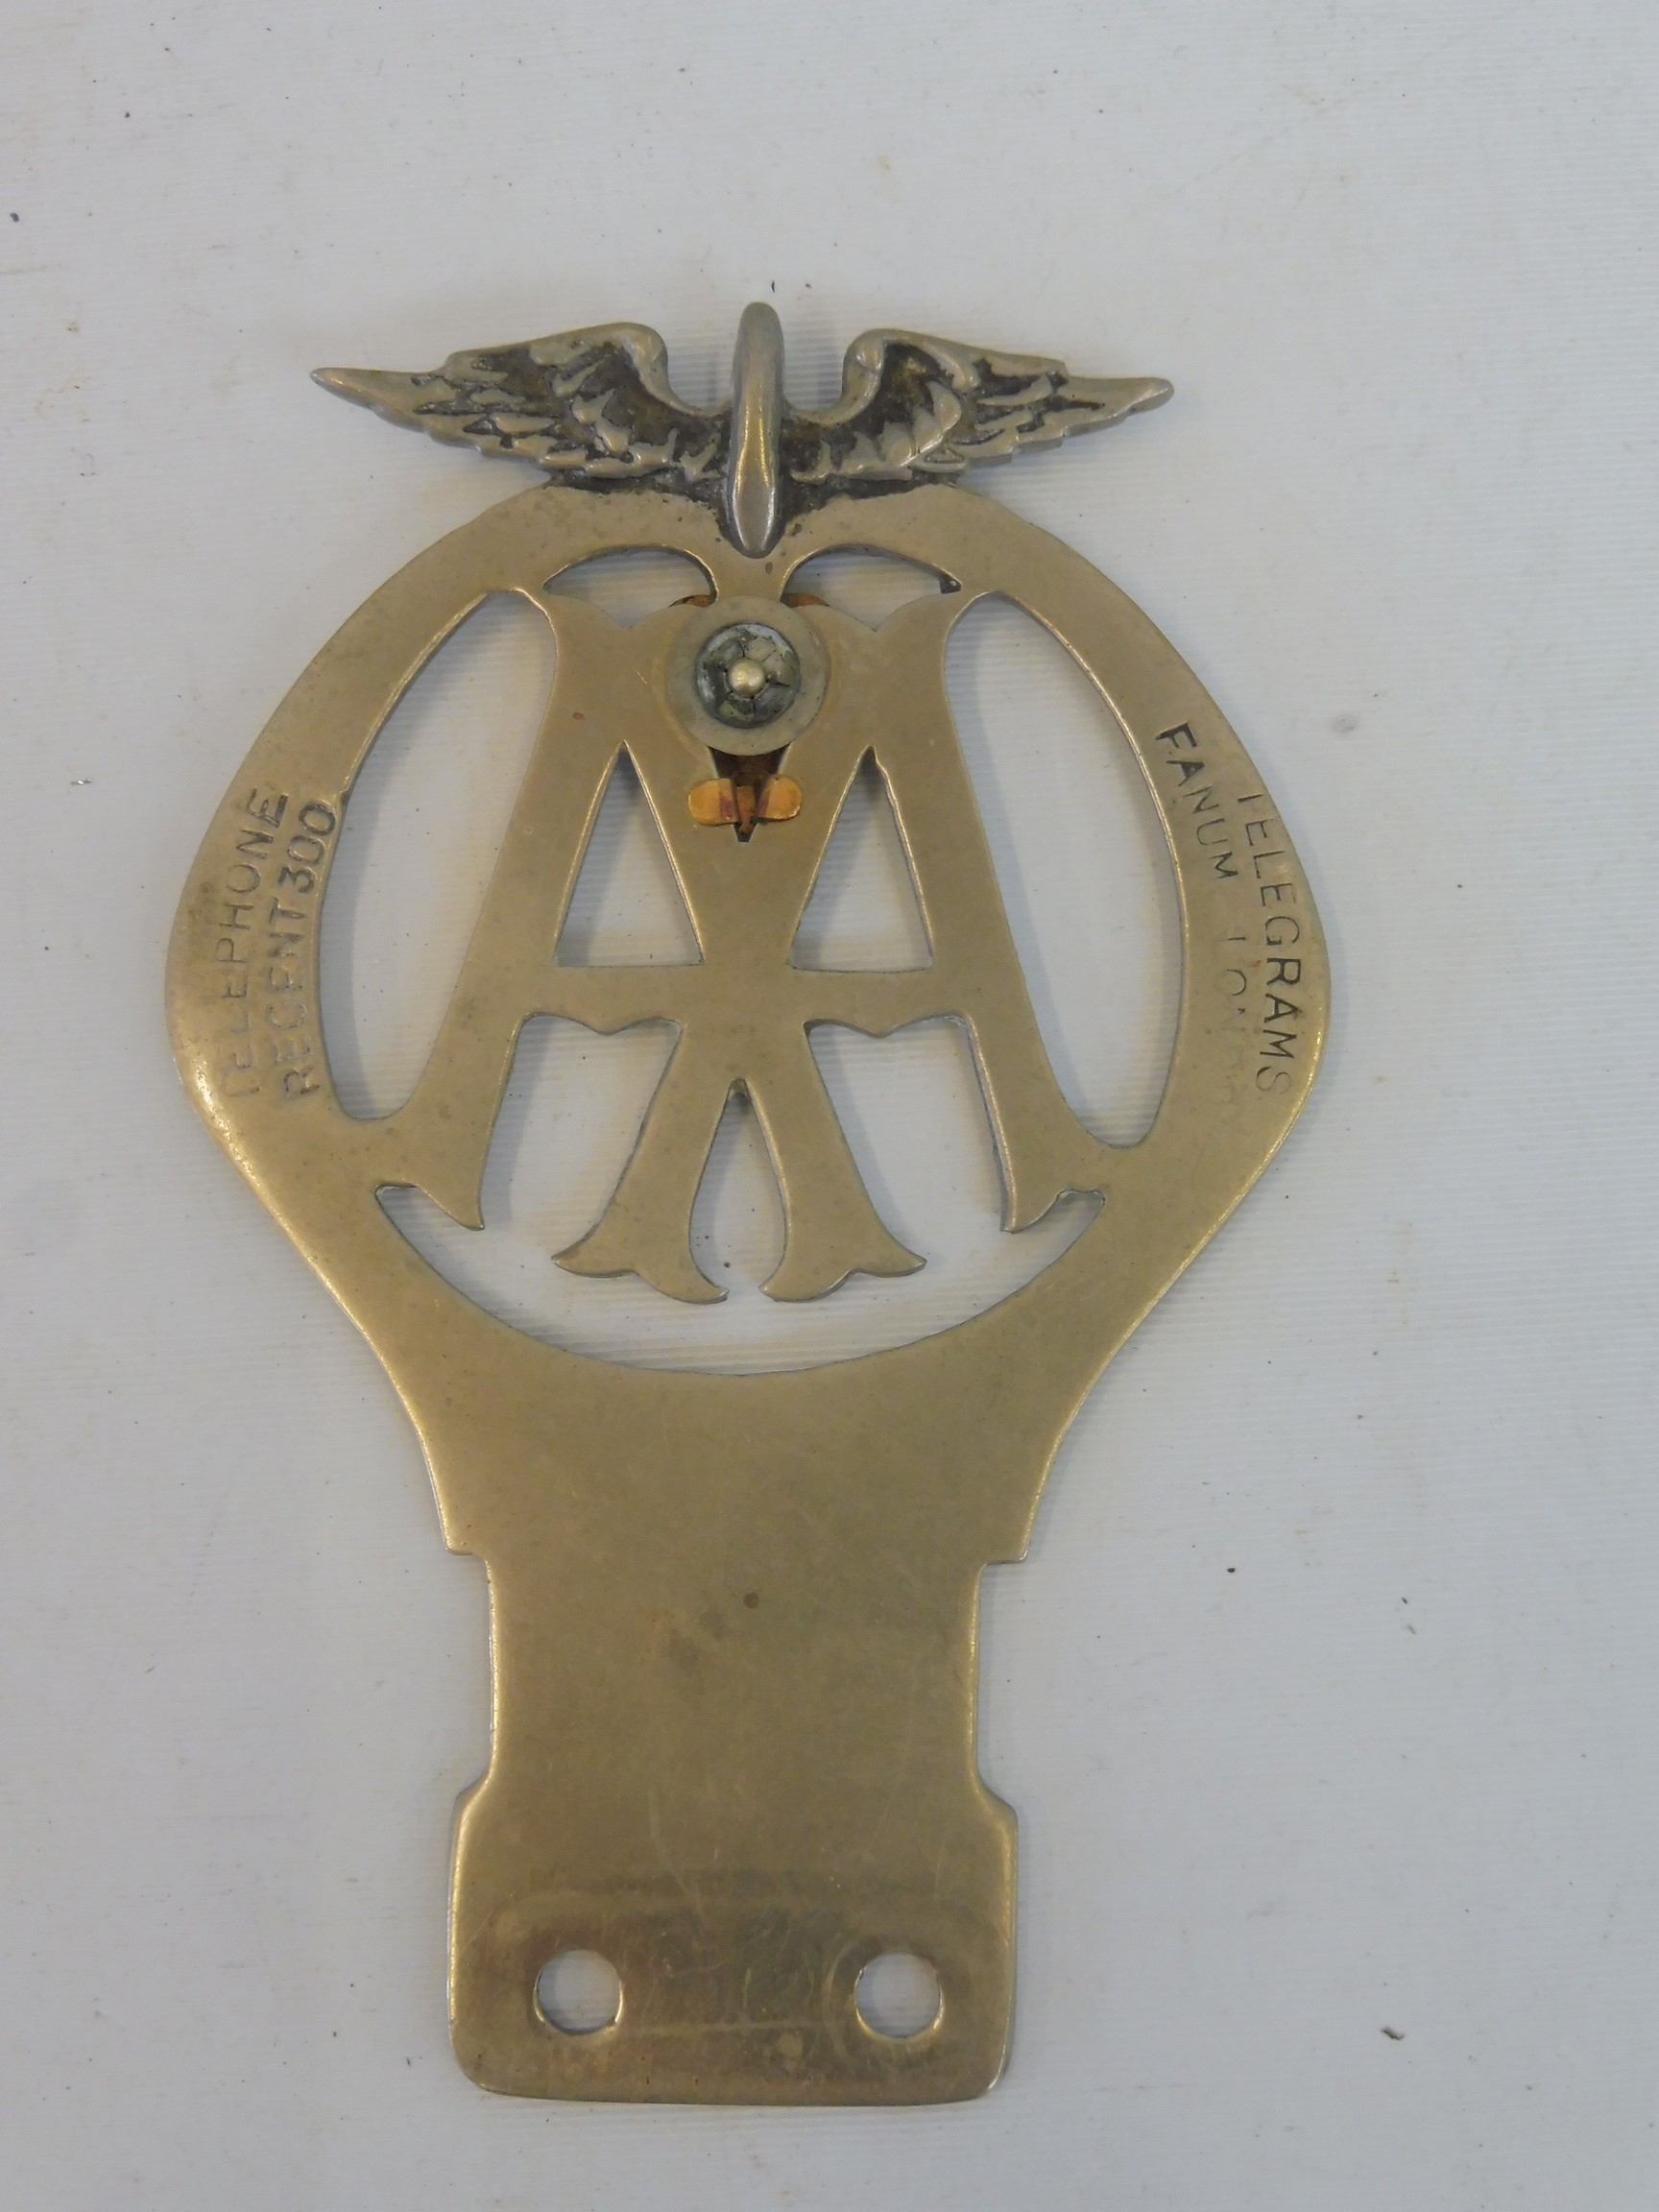 An AA Motorcycle - Cycle Car type 1B badge with red enamel heart shaped token (membership renewal) - Image 3 of 3